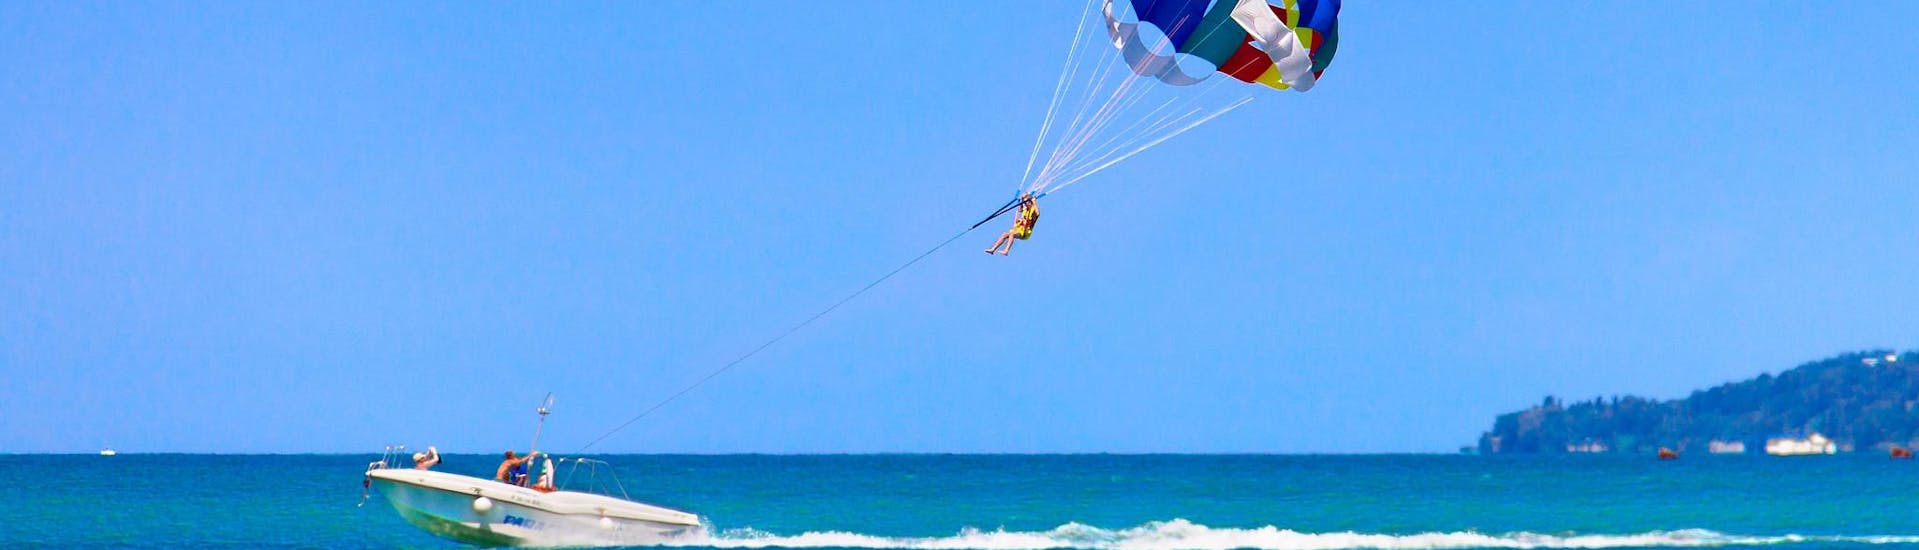 A person having fun during a parasailing activity.